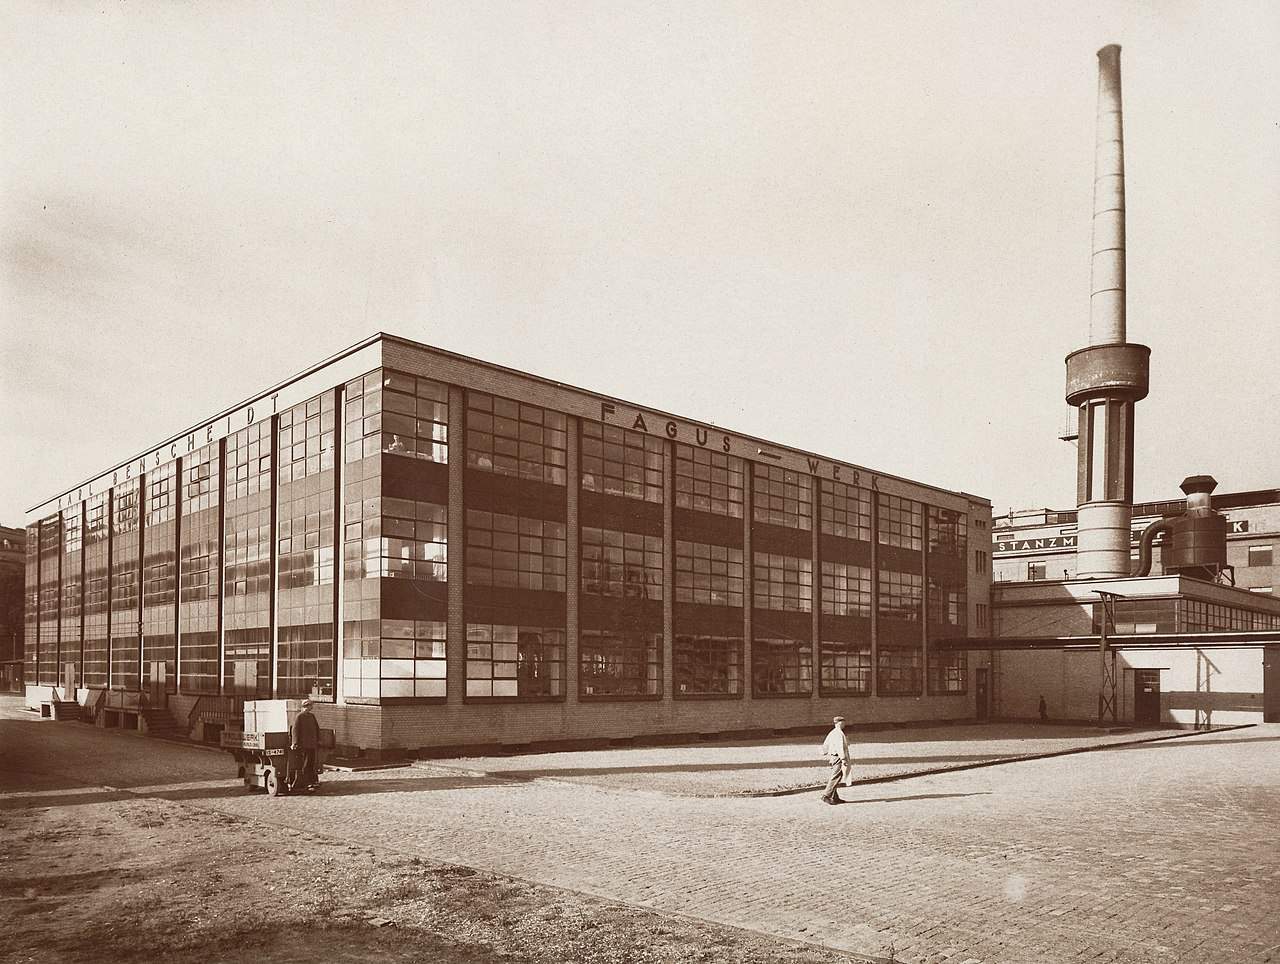 Bauhaus. Origins, development and main exponents of the school